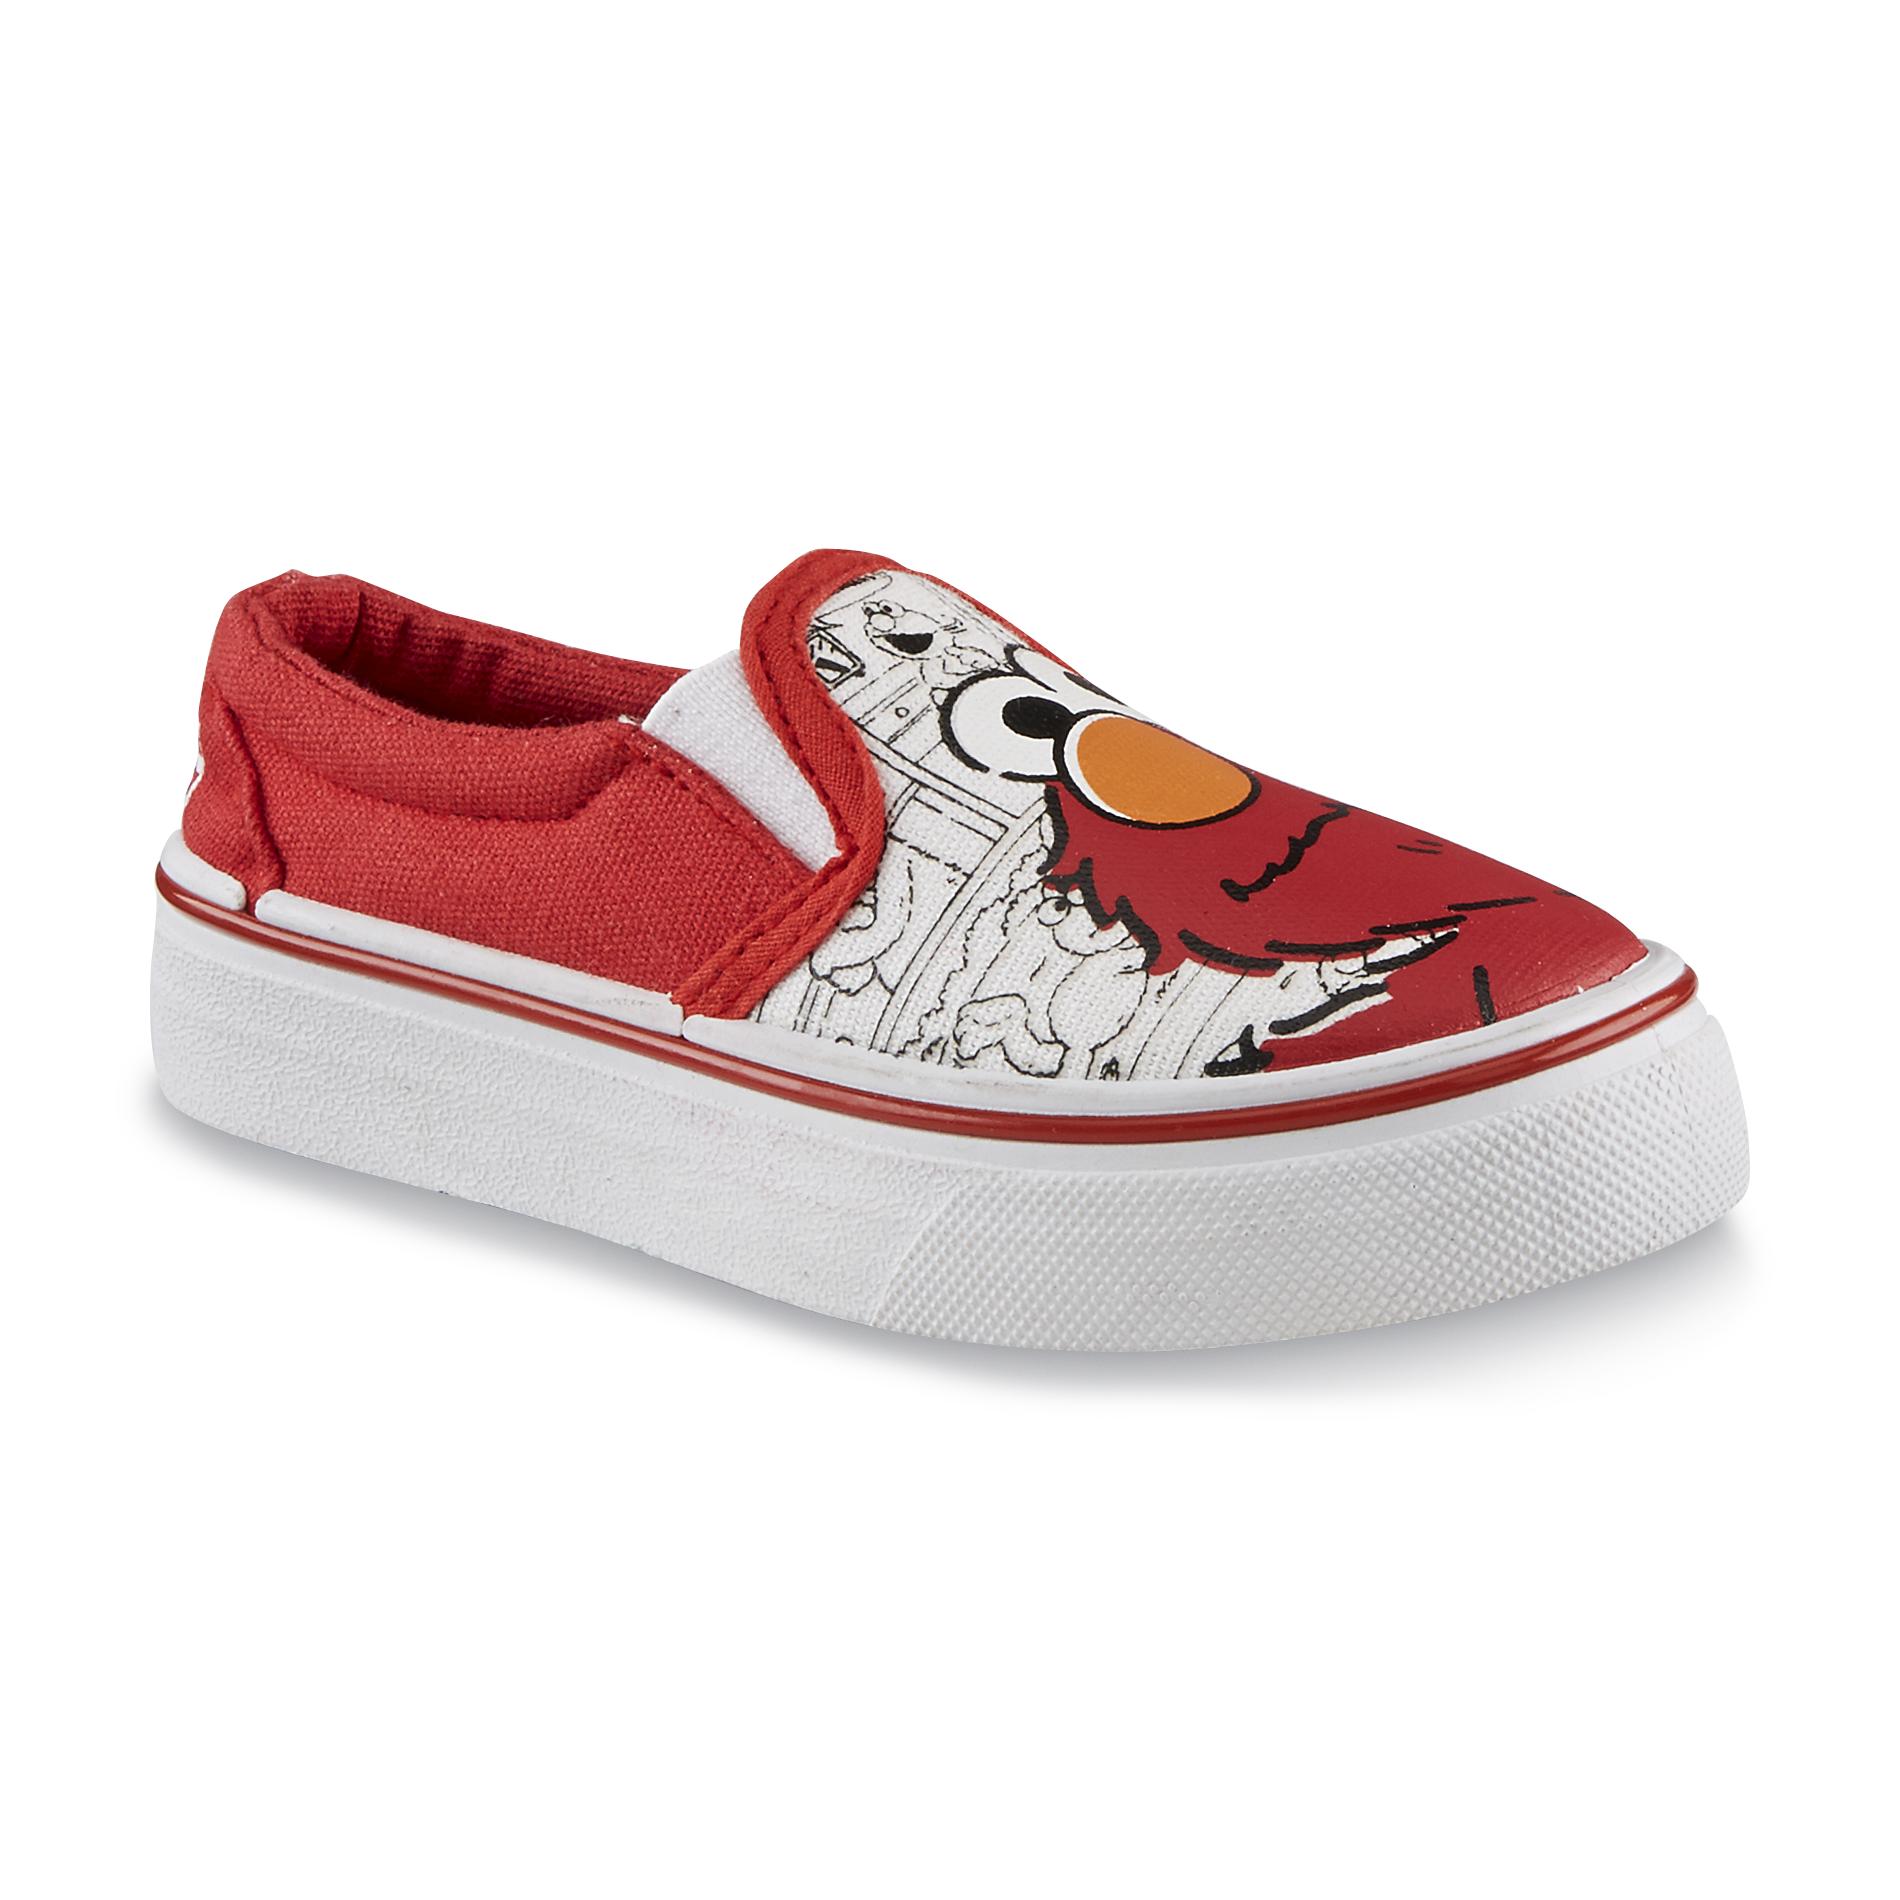 Sesame Street Toddler Boy's Elmo Red SlipOn Shoe Shoes